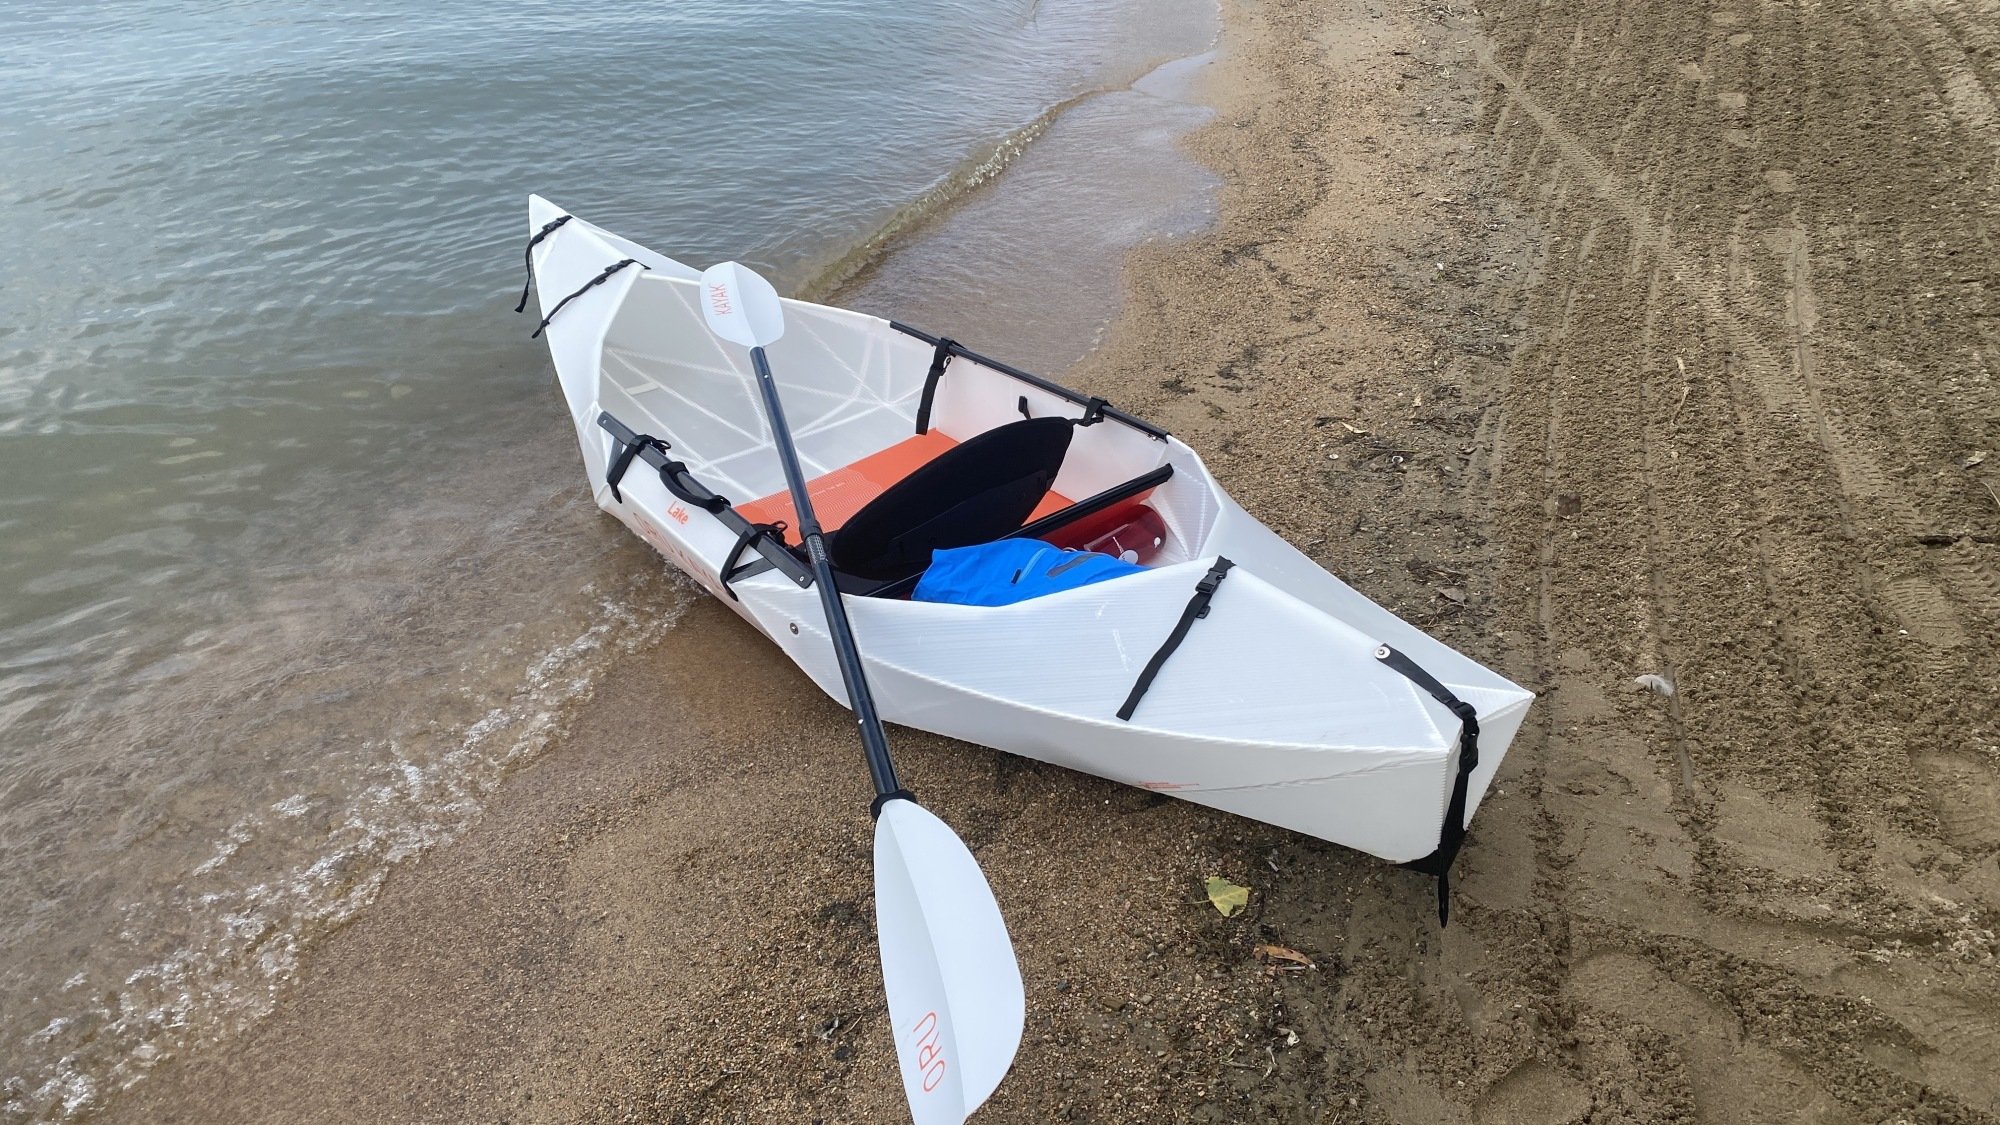 Fully assembled Oru Lake kayak on a lake shore